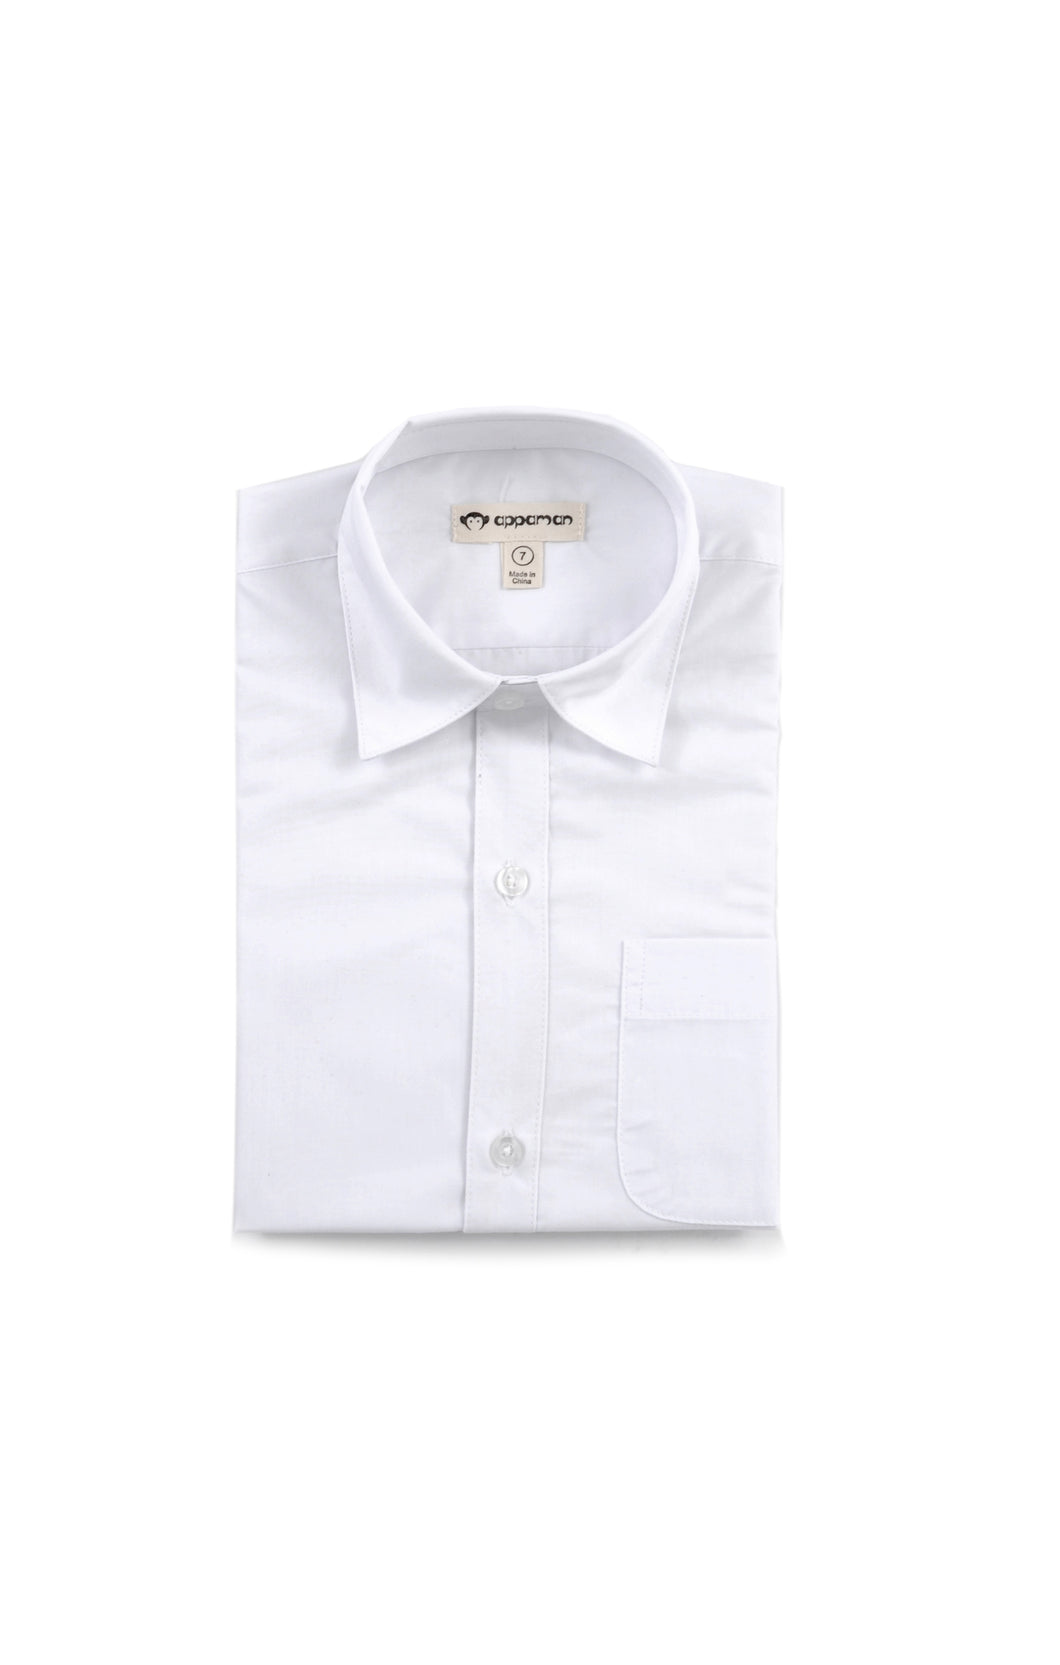 Standard Shirt - White